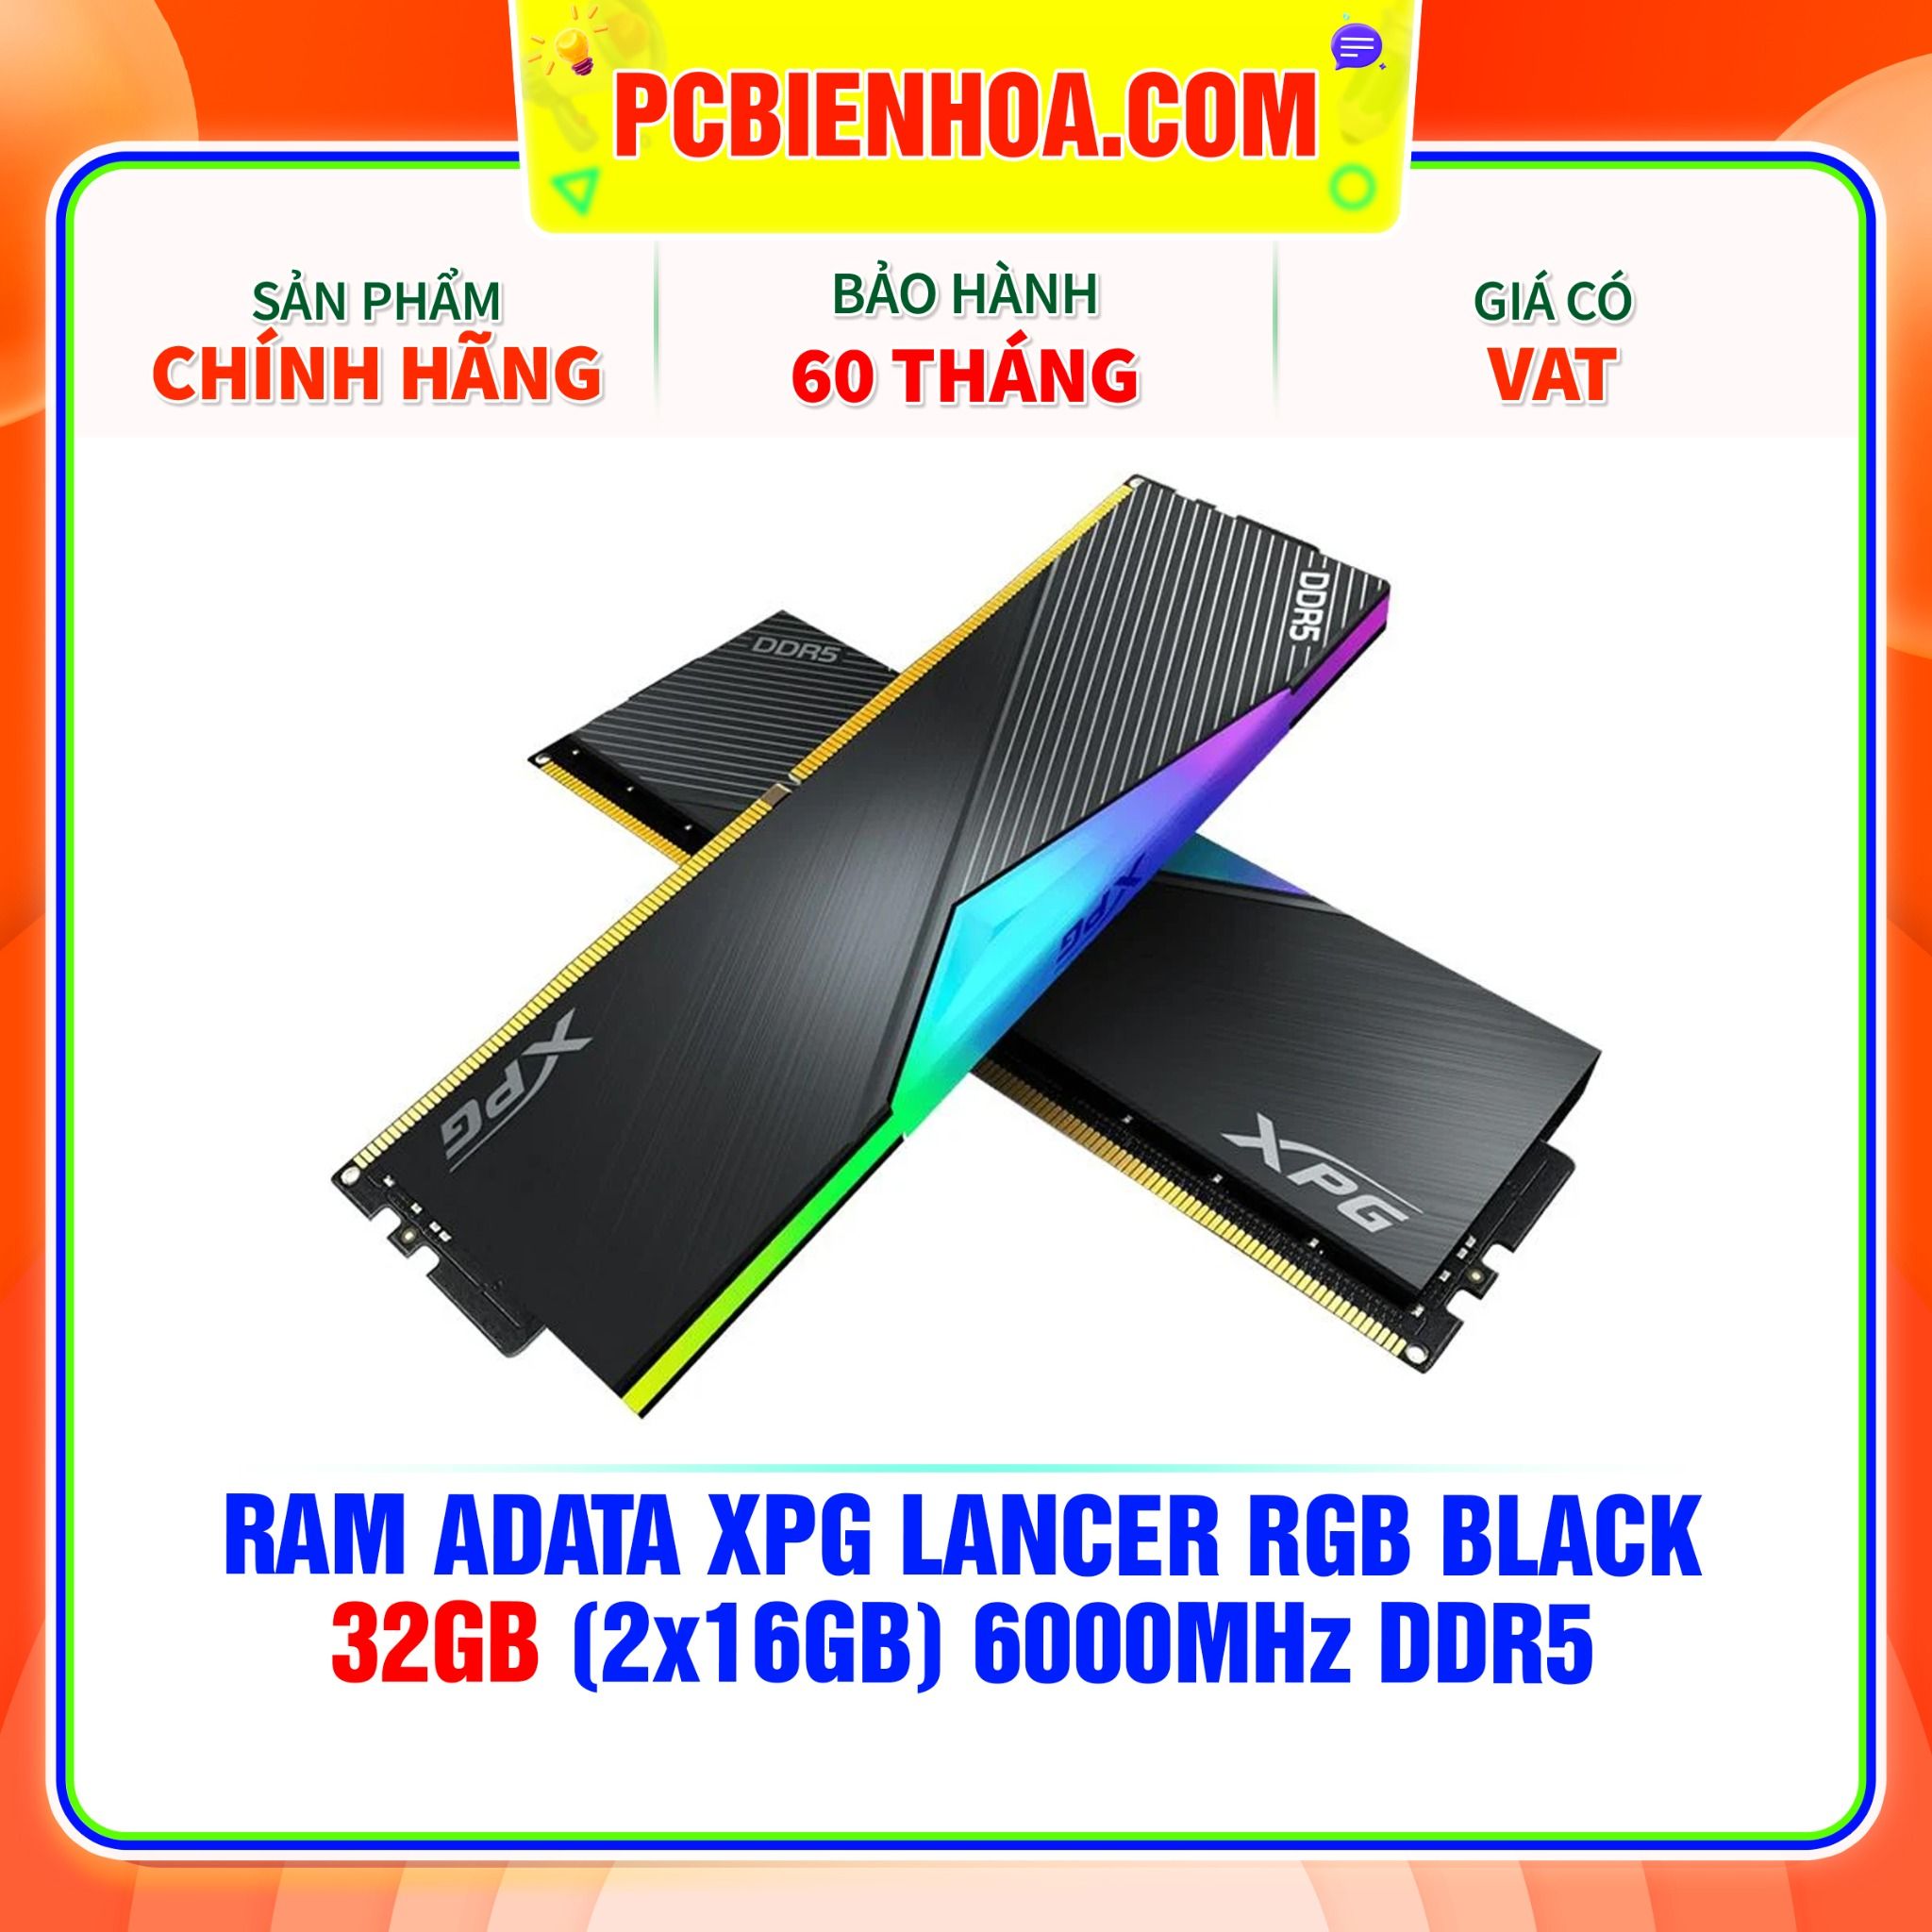  RAM ADATA XPG LANCER RGB BLACK - 32GB (2x16GB) 6000MHz DDR5 